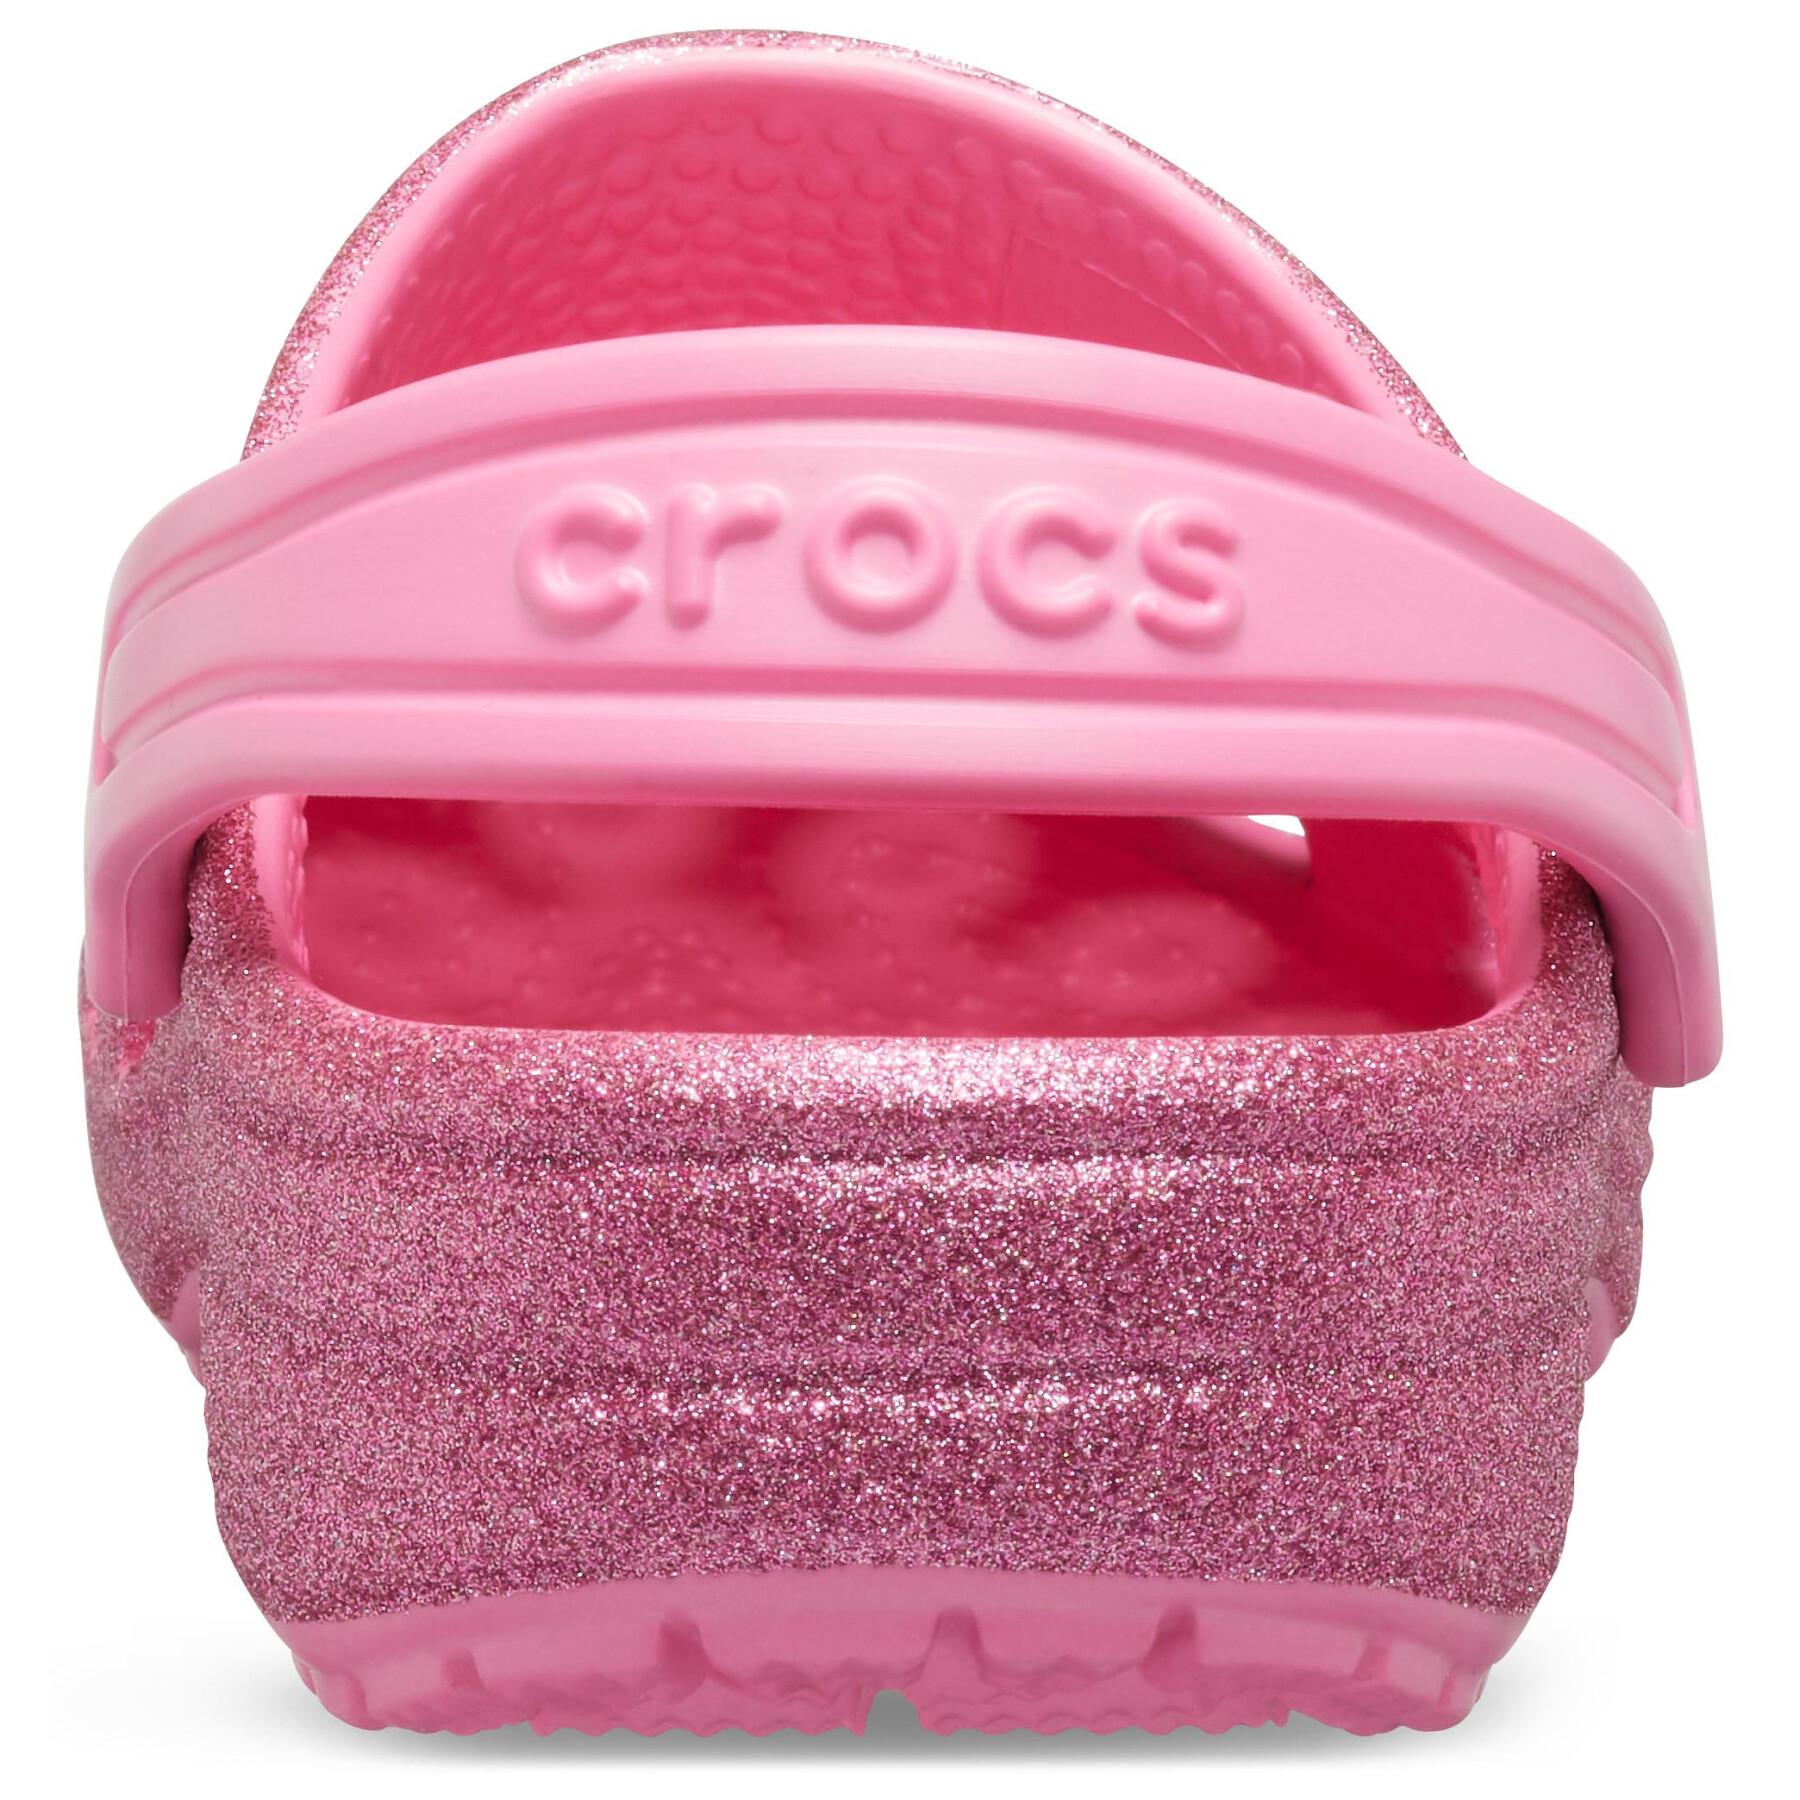 Crocs enfant classic glitter clog